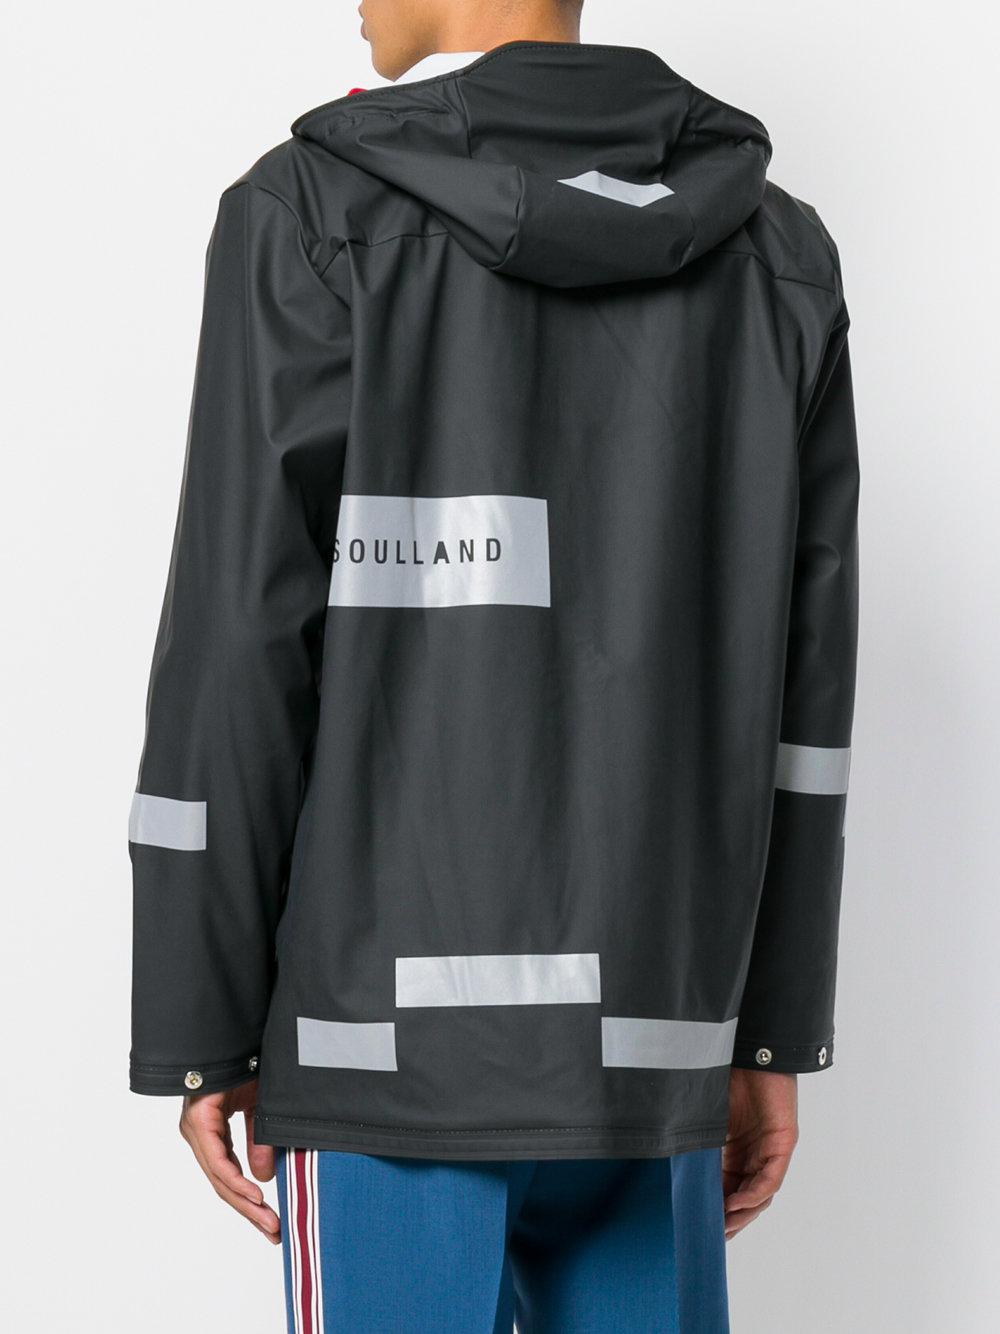 Soulland X 66 North Rain Jacket in Black for Men - Lyst